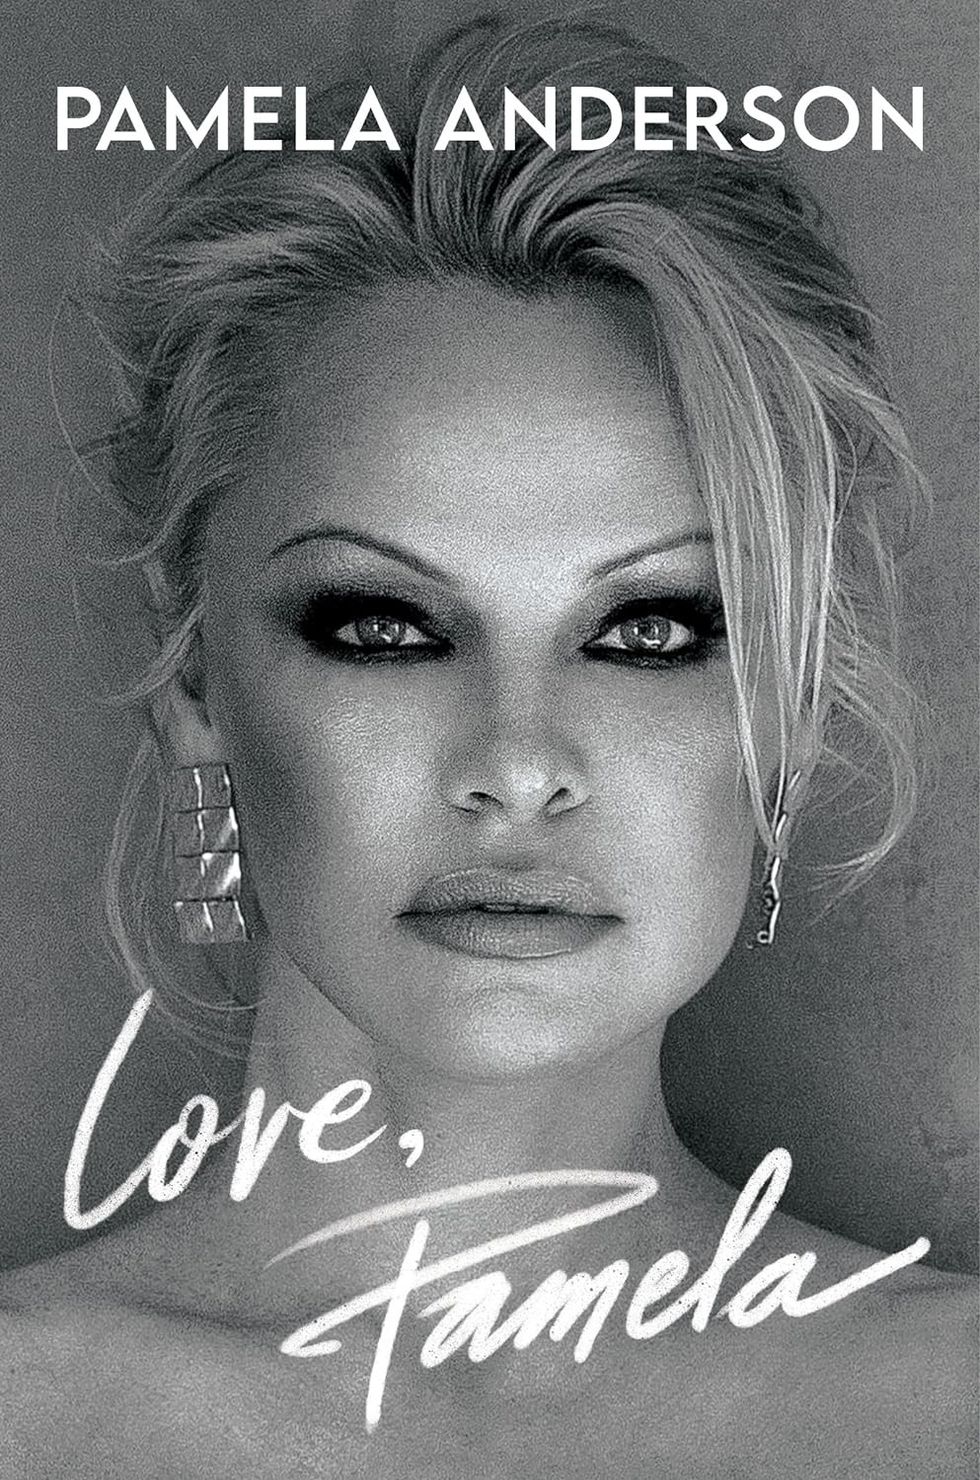 "Love, Pamela" by Pamela Anderson